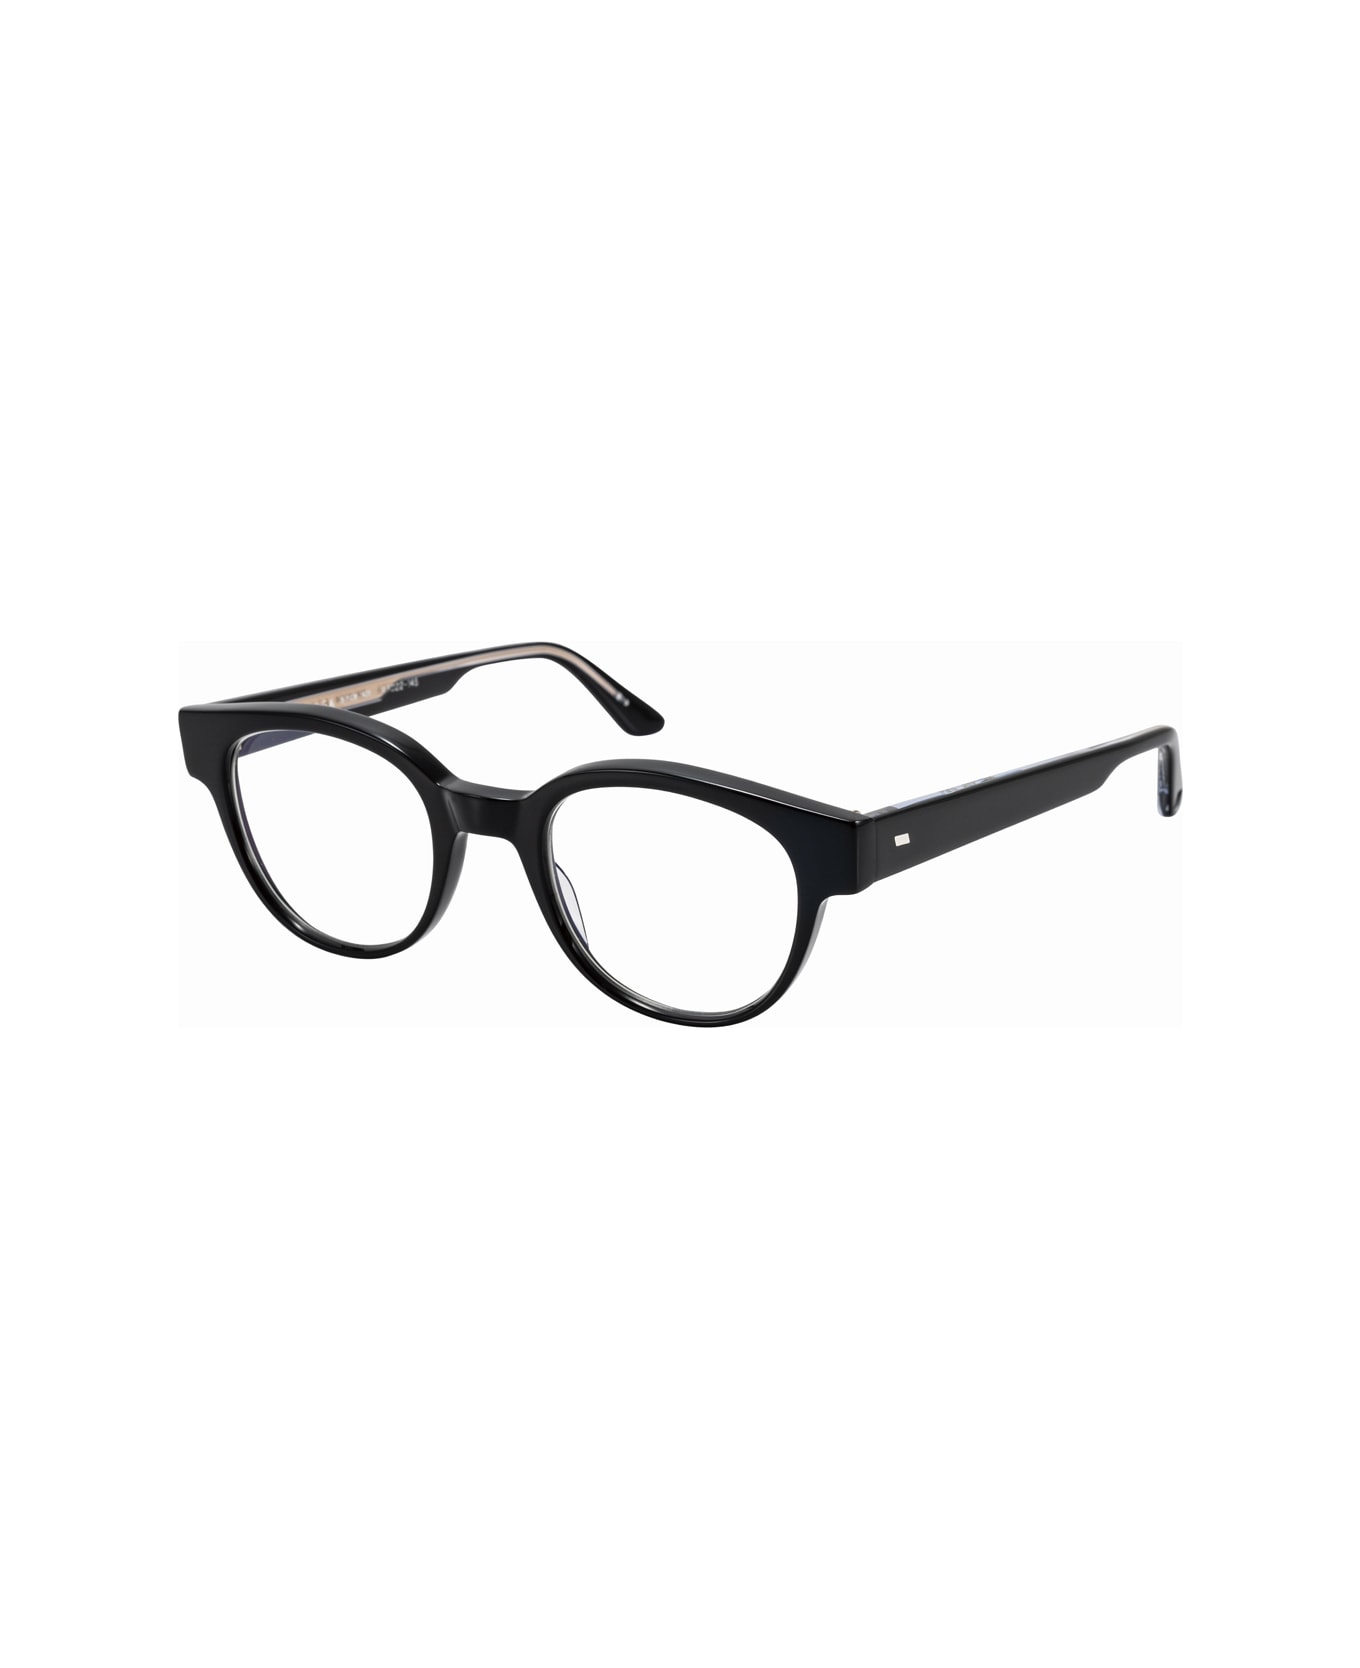 Masunaga 11dj4bl0a Glasses - Nero アイウェア